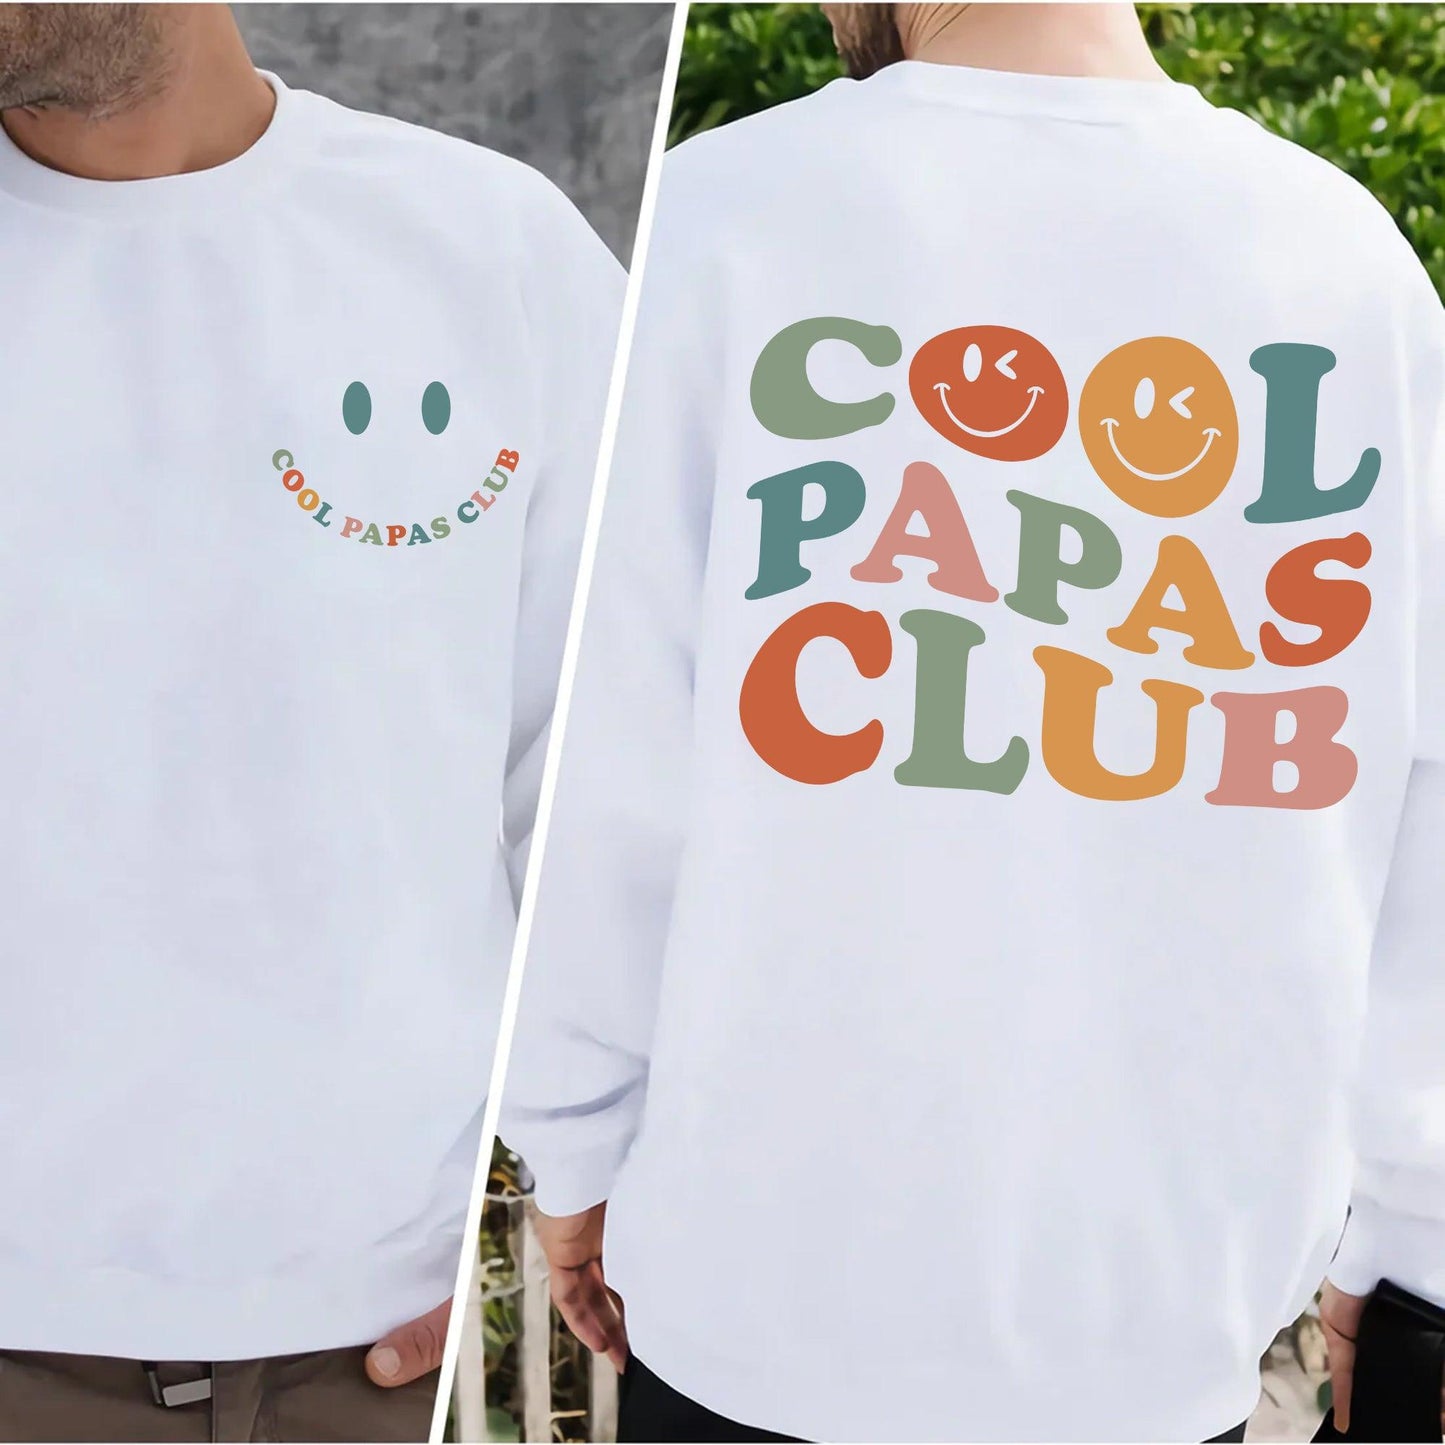 Cooles Papas Club Sweatshirt - Papa Geschenk - GiftHaus